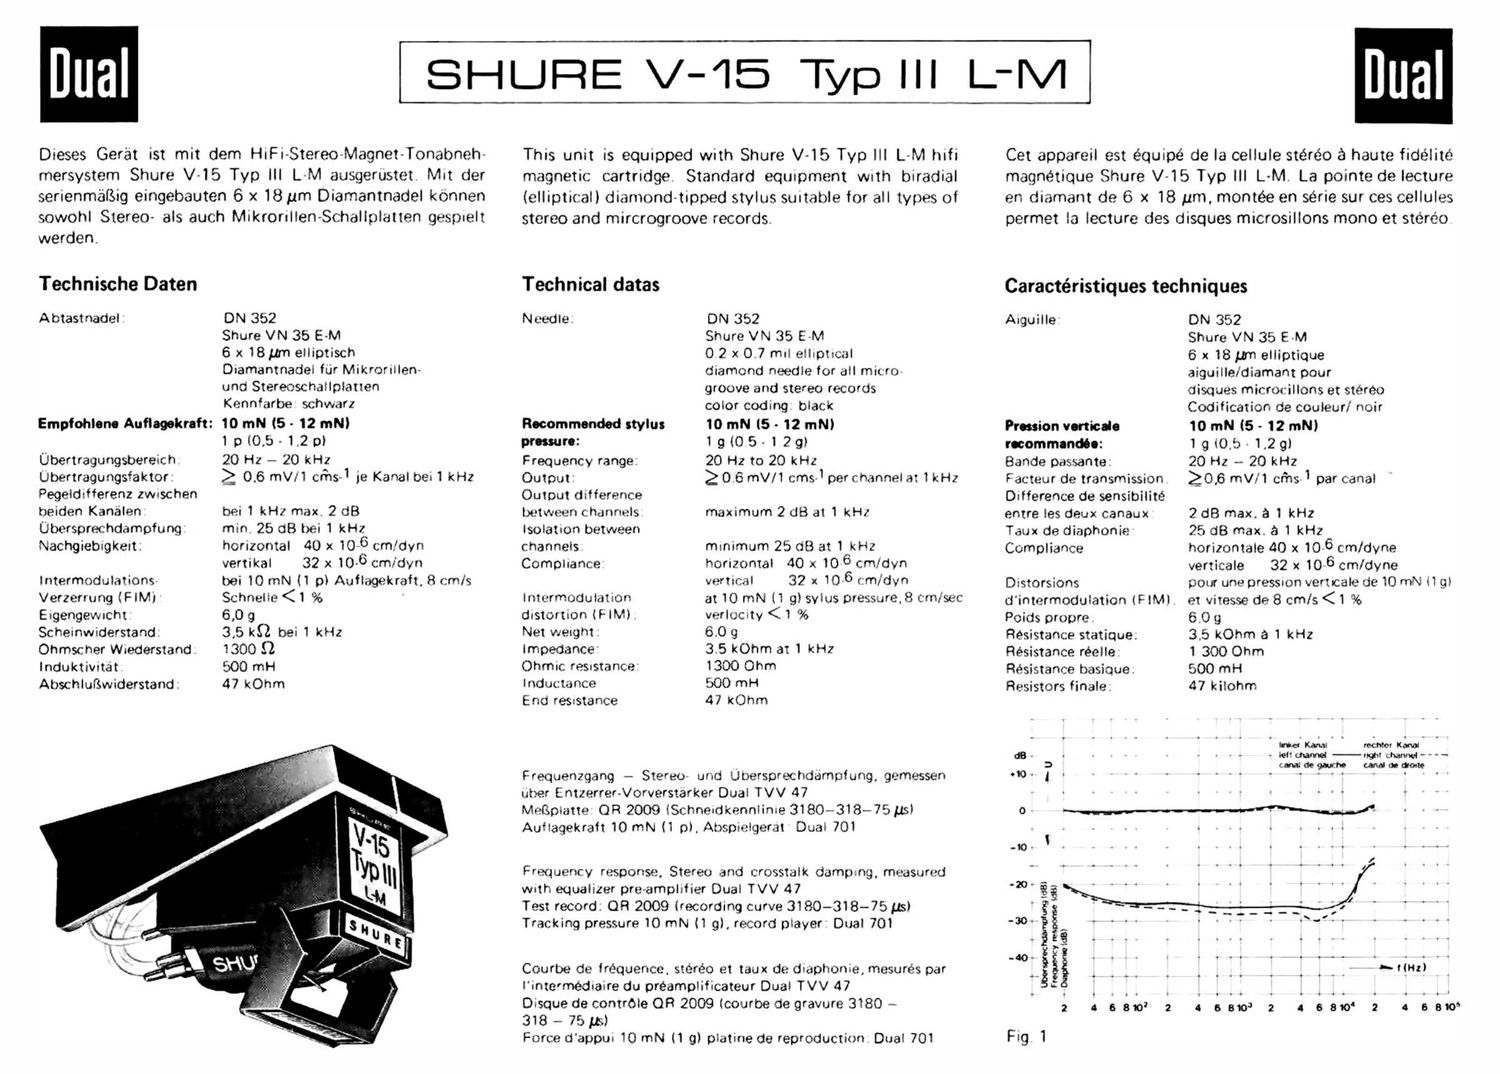 dual shure v 15 iii l m owners manual